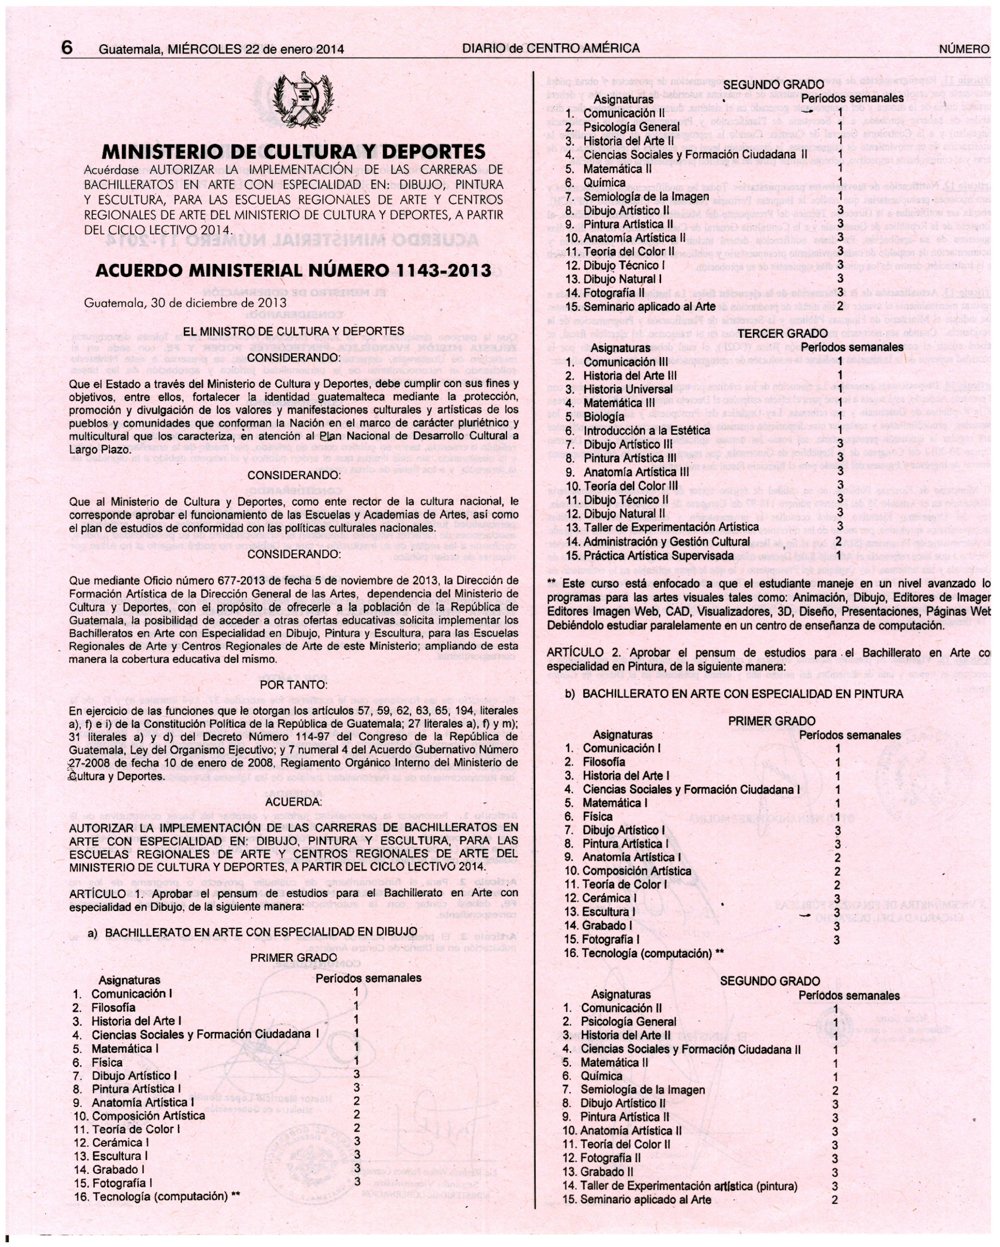 Acuerdo Ministerial 1143-2013-IMPLEMENTACIÓN DE LAS CARRERAS DE BACHILLERATO EN ART2